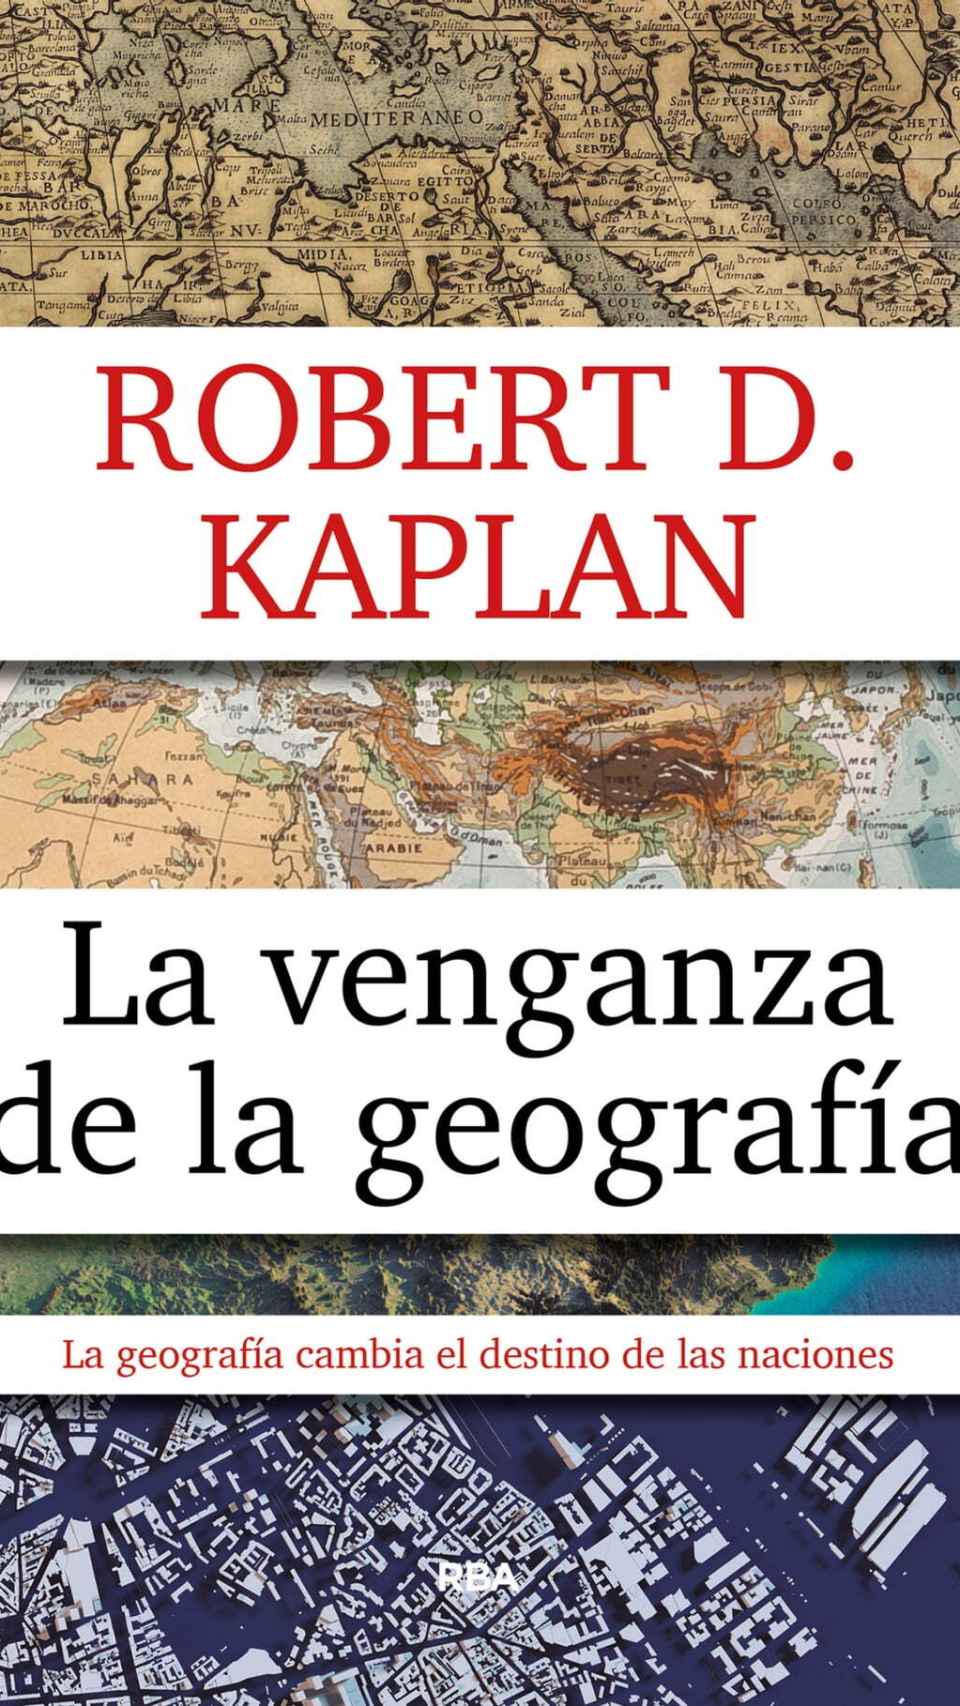 La venganza de la geografía, de Robert D. Kaplan.